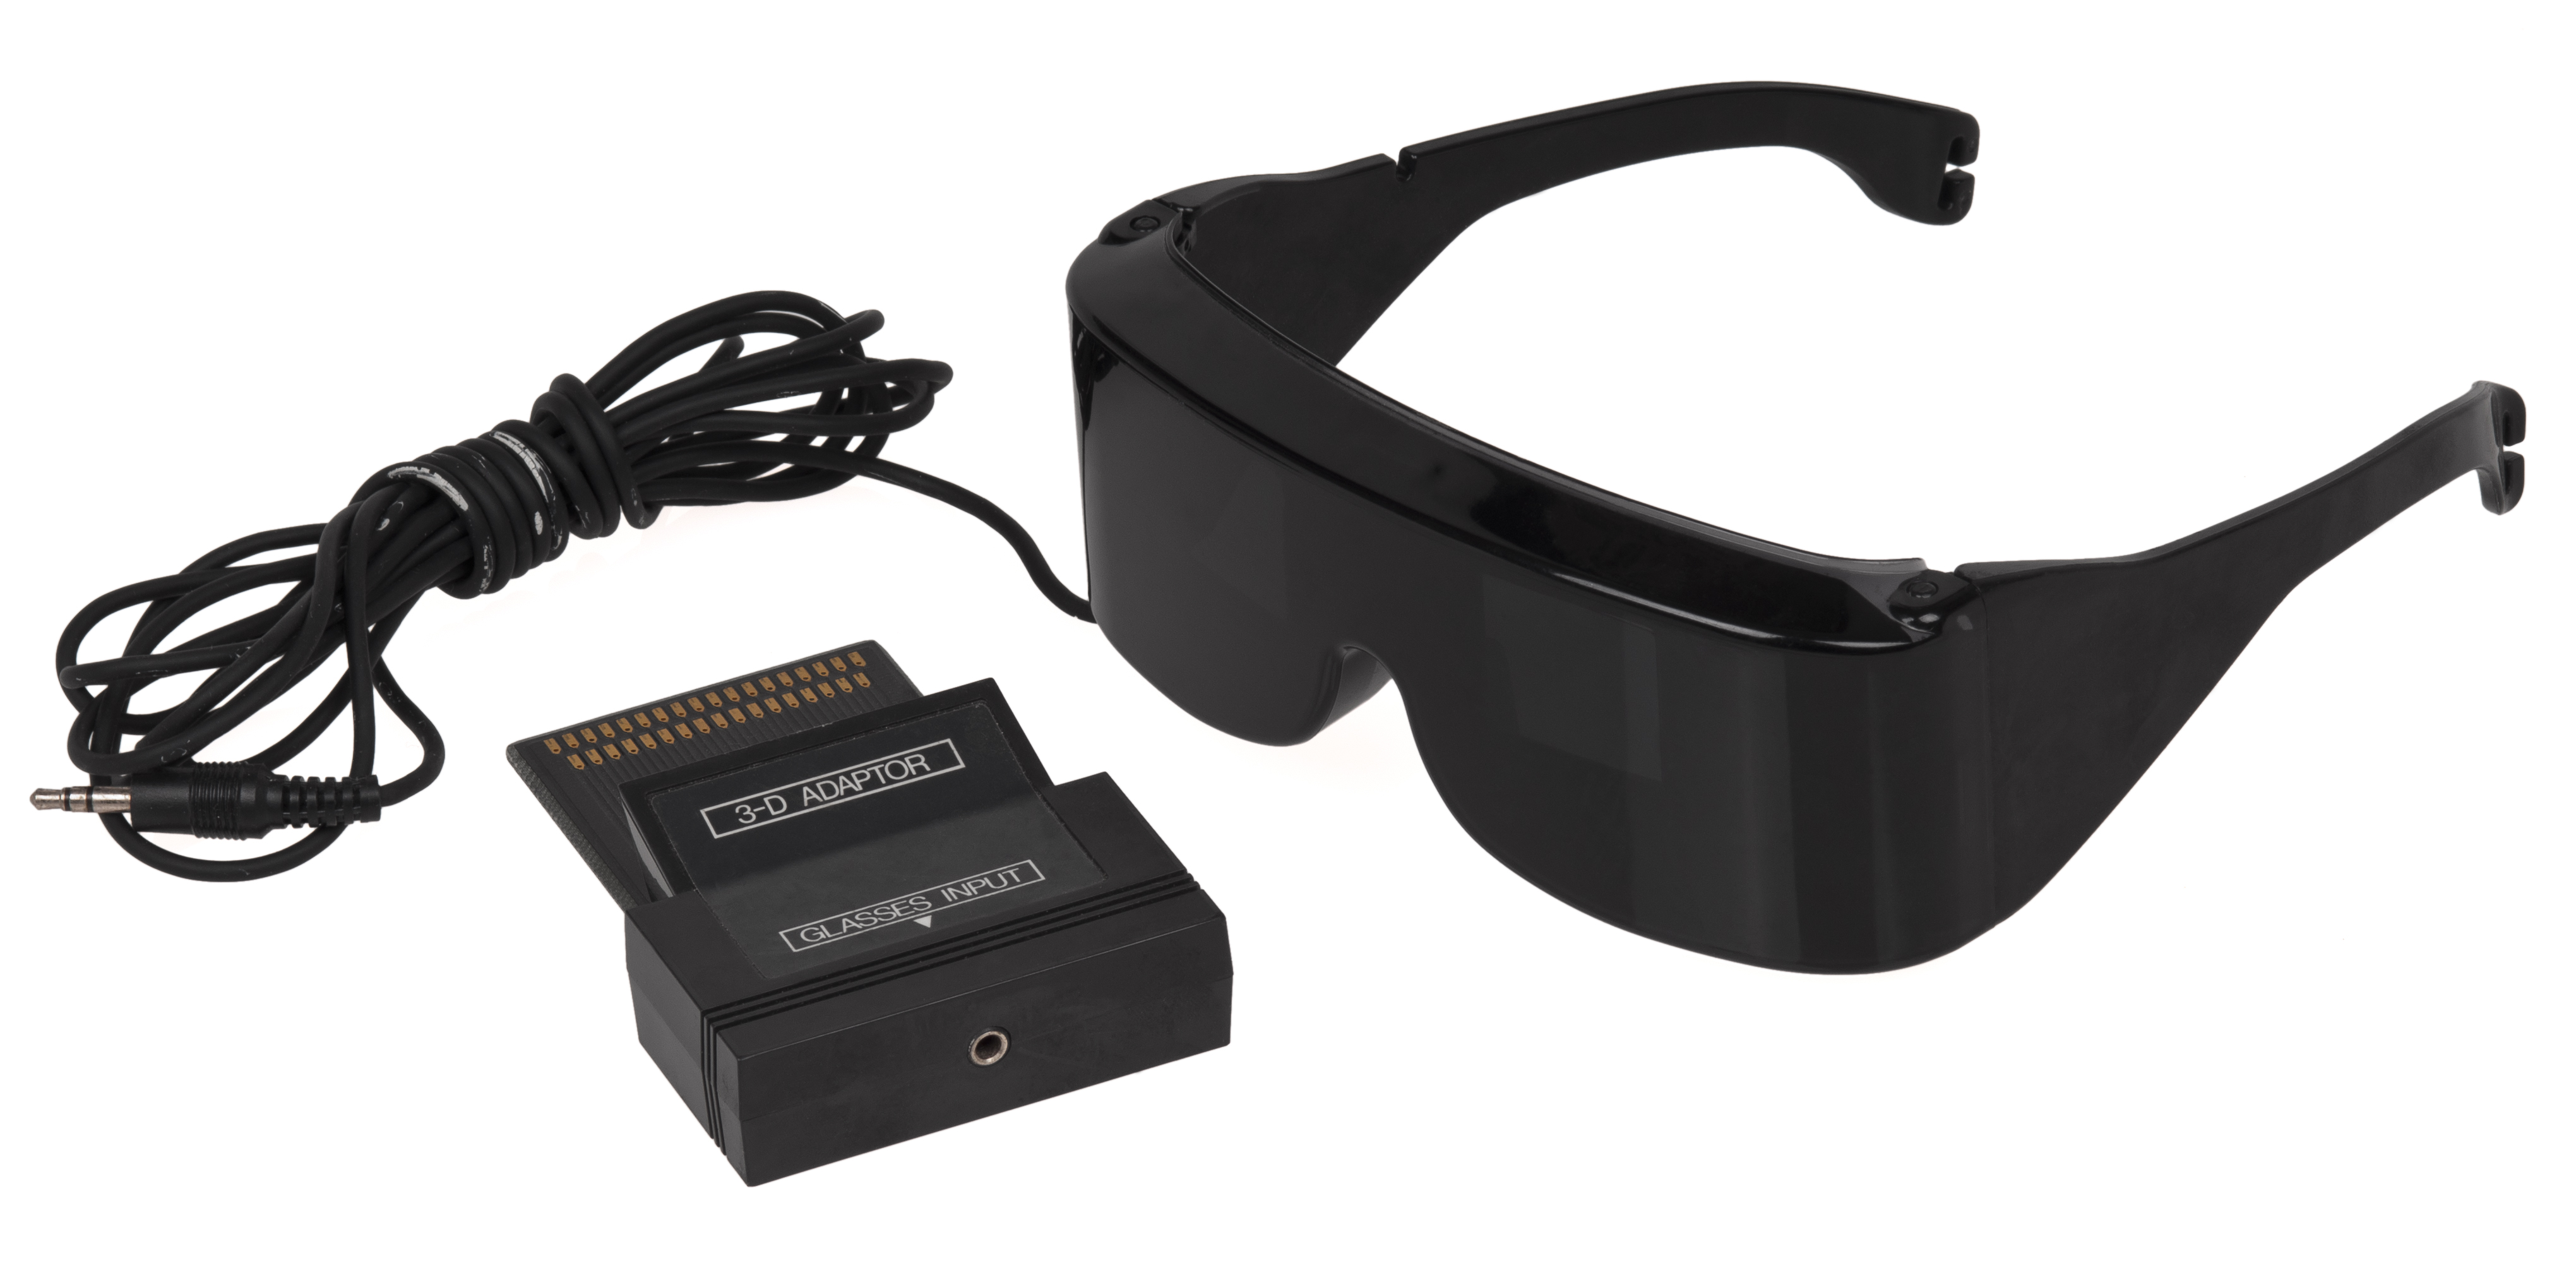 retro video game technology 1980s - SegaScope 3D Glasses